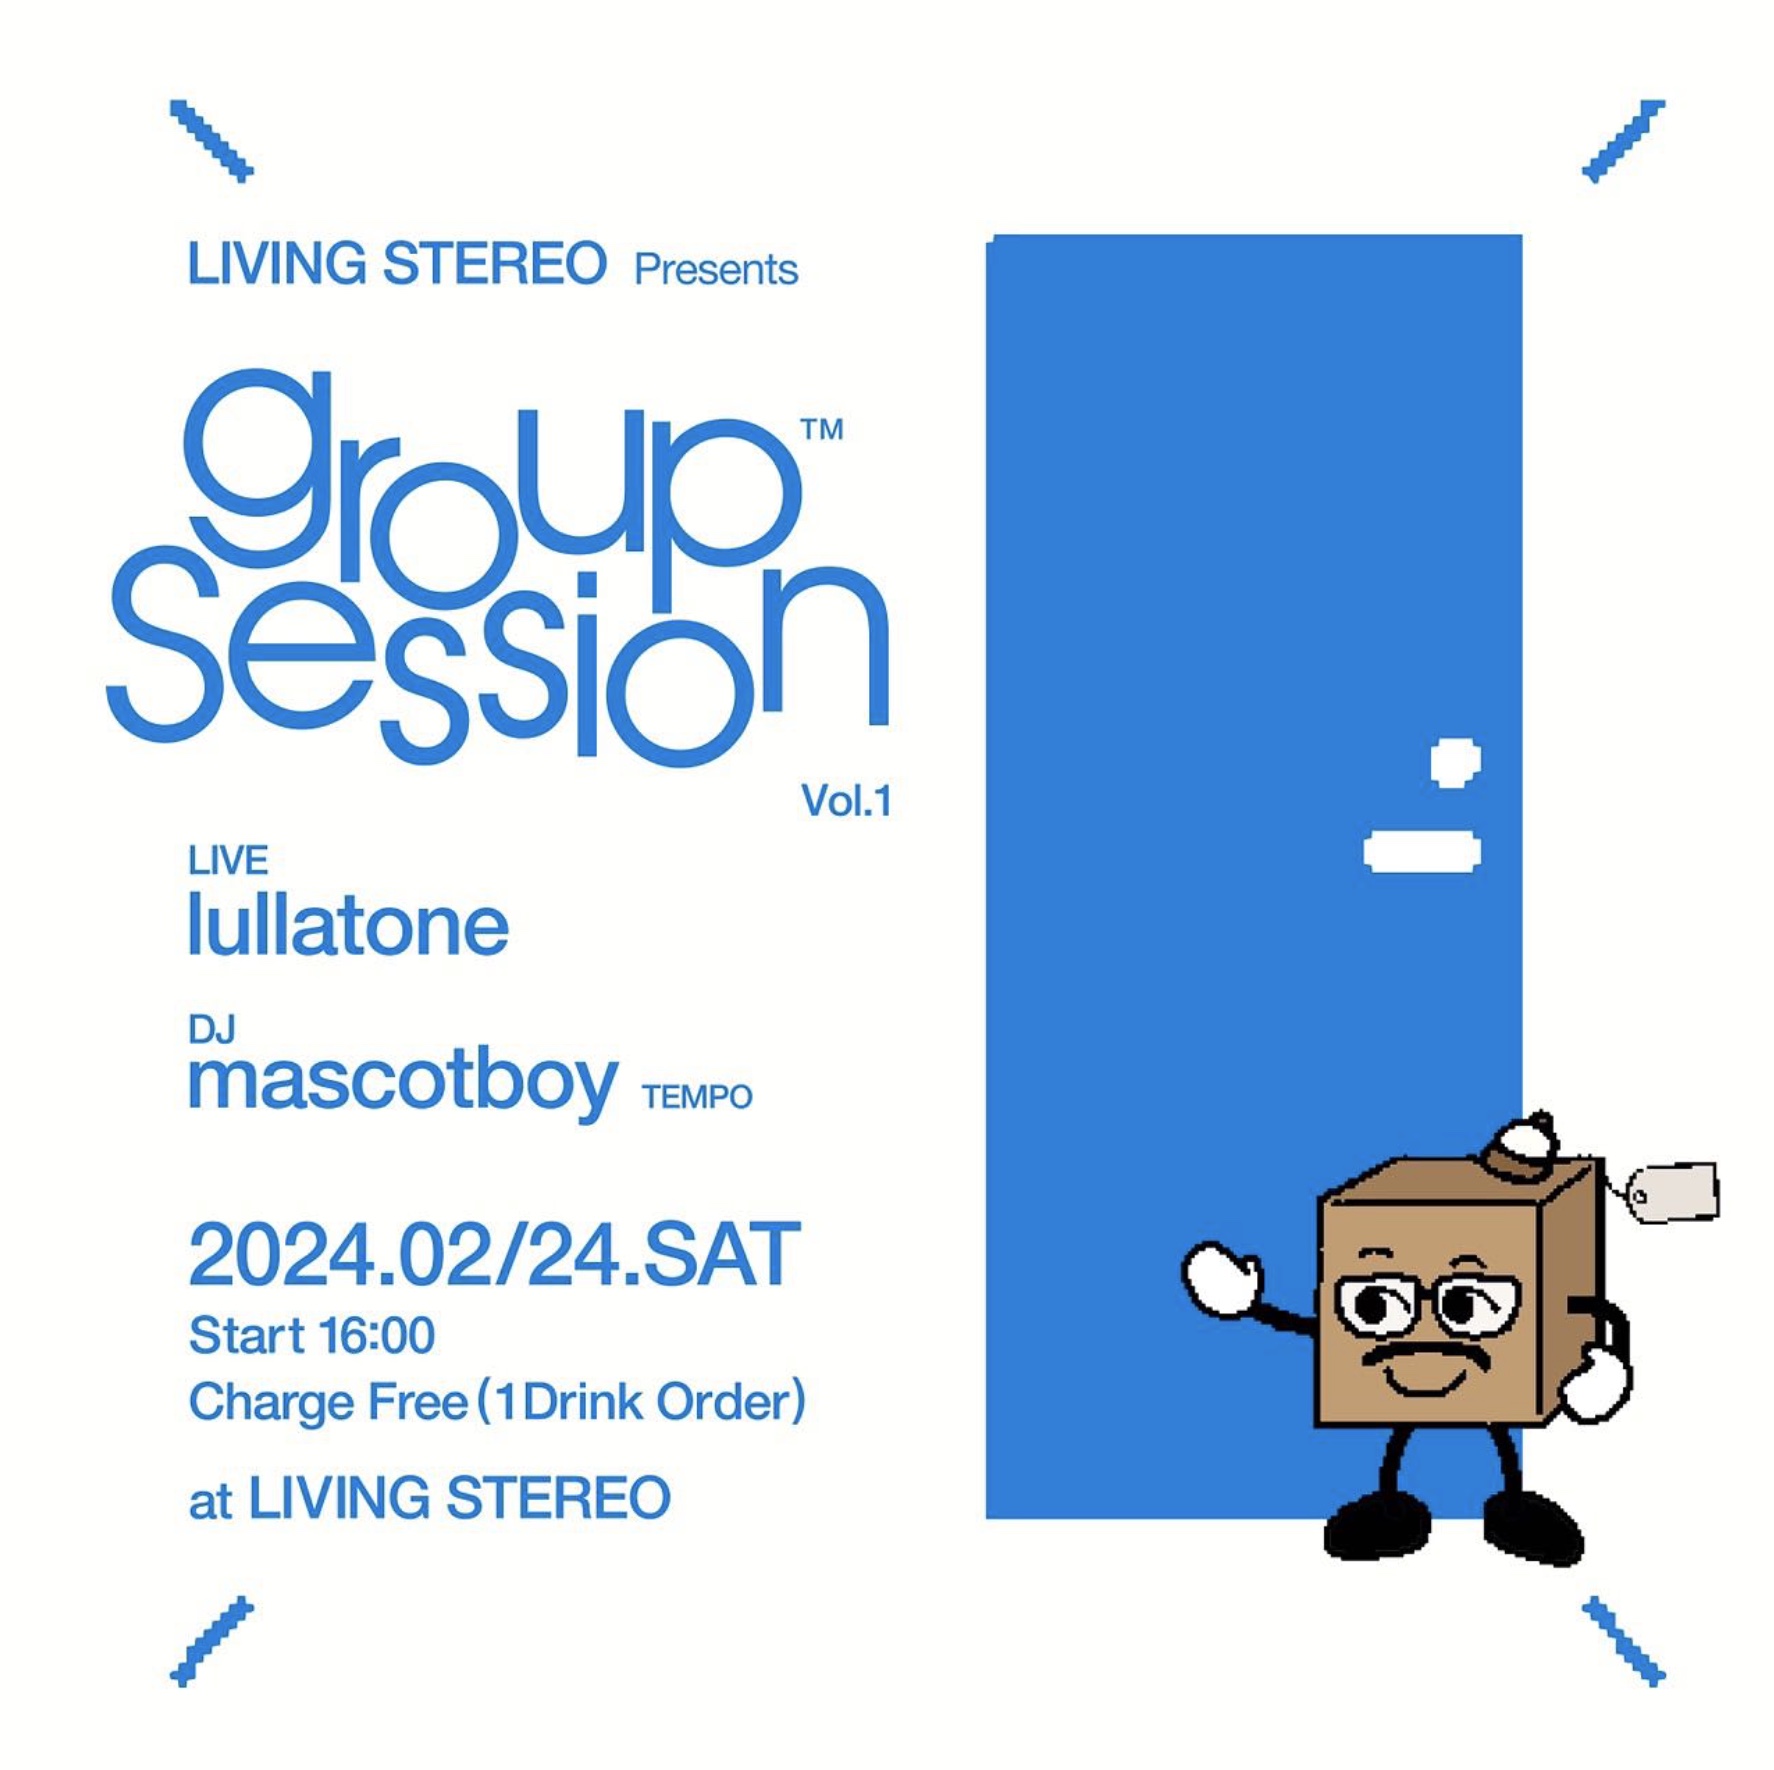 LIVING STEREO Presents "Group Session Vol.1 lullatone & mascotboy"